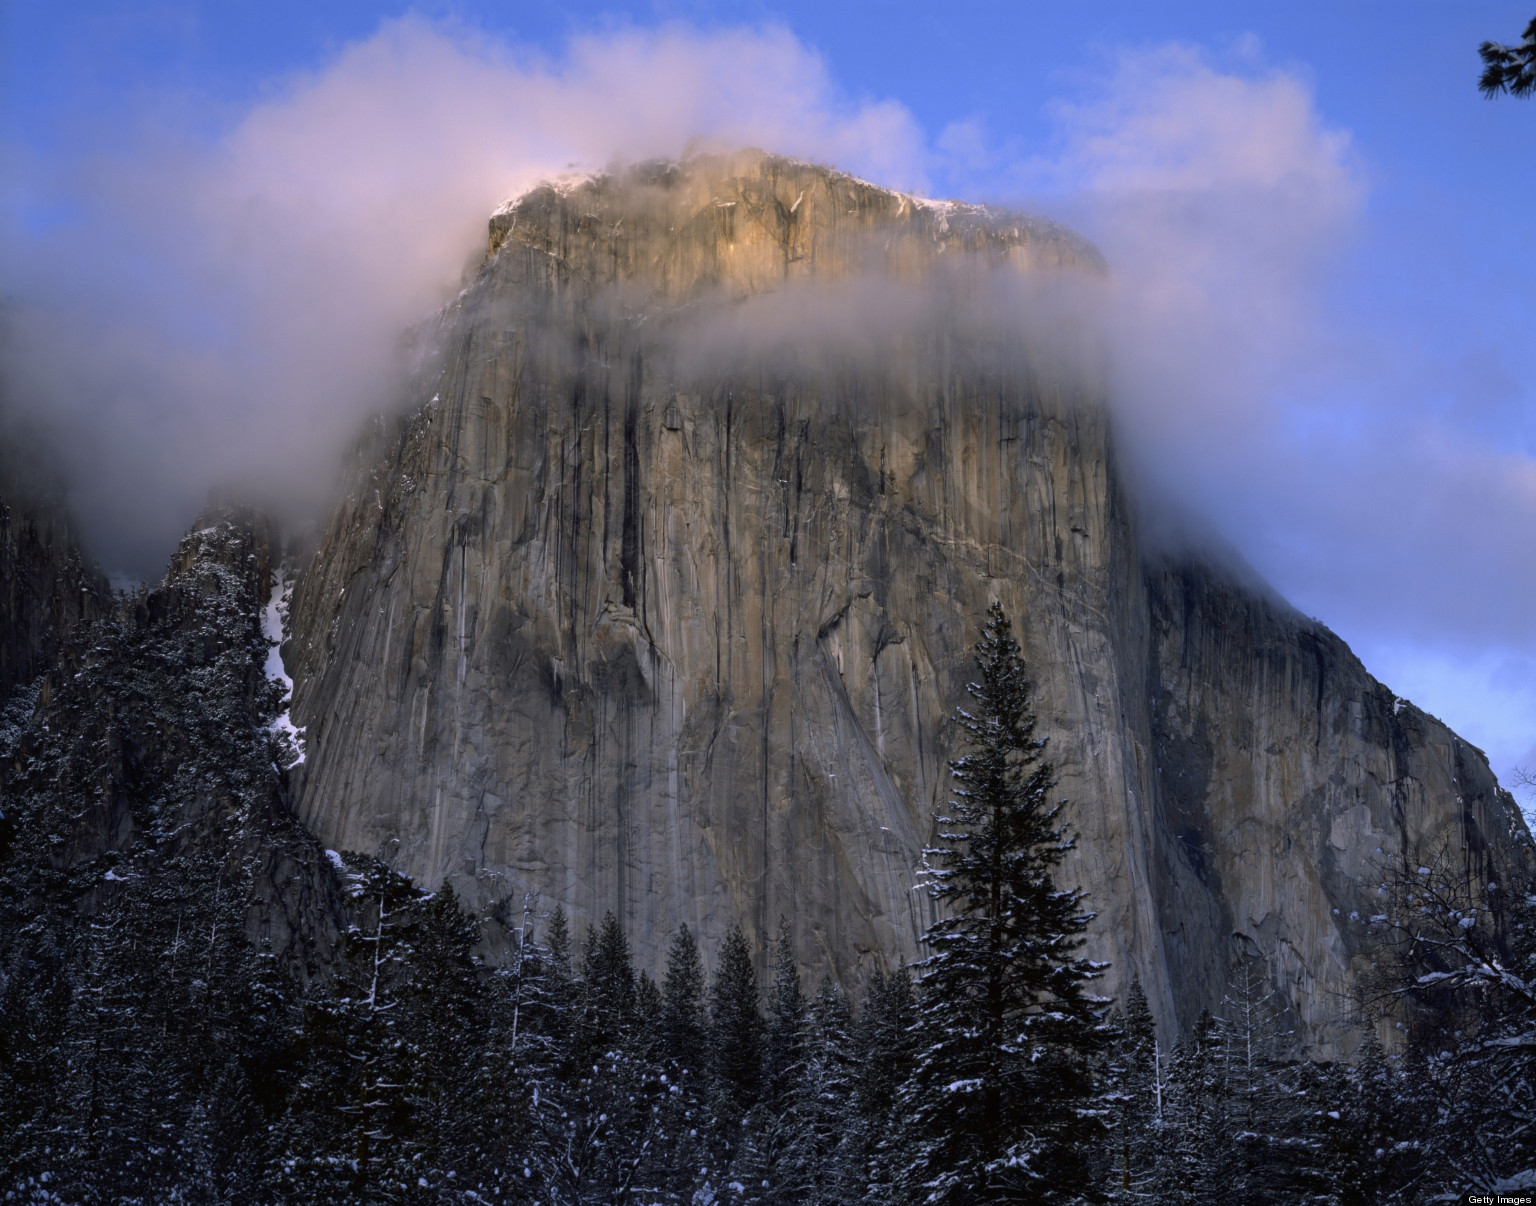 Apples Yosemite Image Suitable for a Desktop Background iimgur